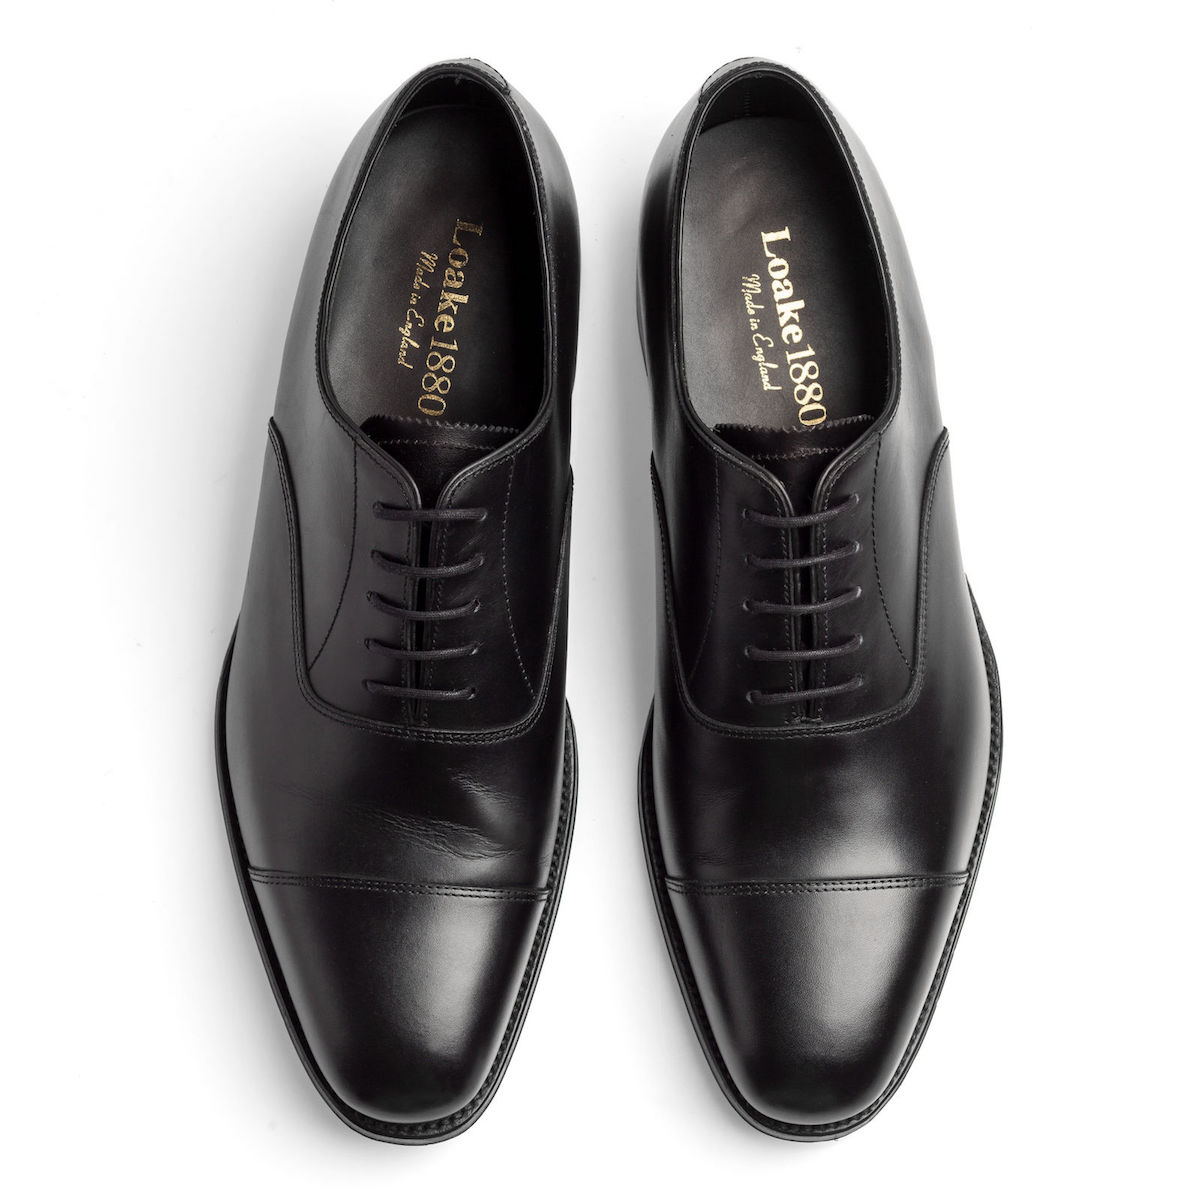 Туфли мужские 39. Оксфорды (Oxford Shoes) обувь 2021. Туфли Loake. Английские ботинки Loake. Loake обувь черные оксфорды.